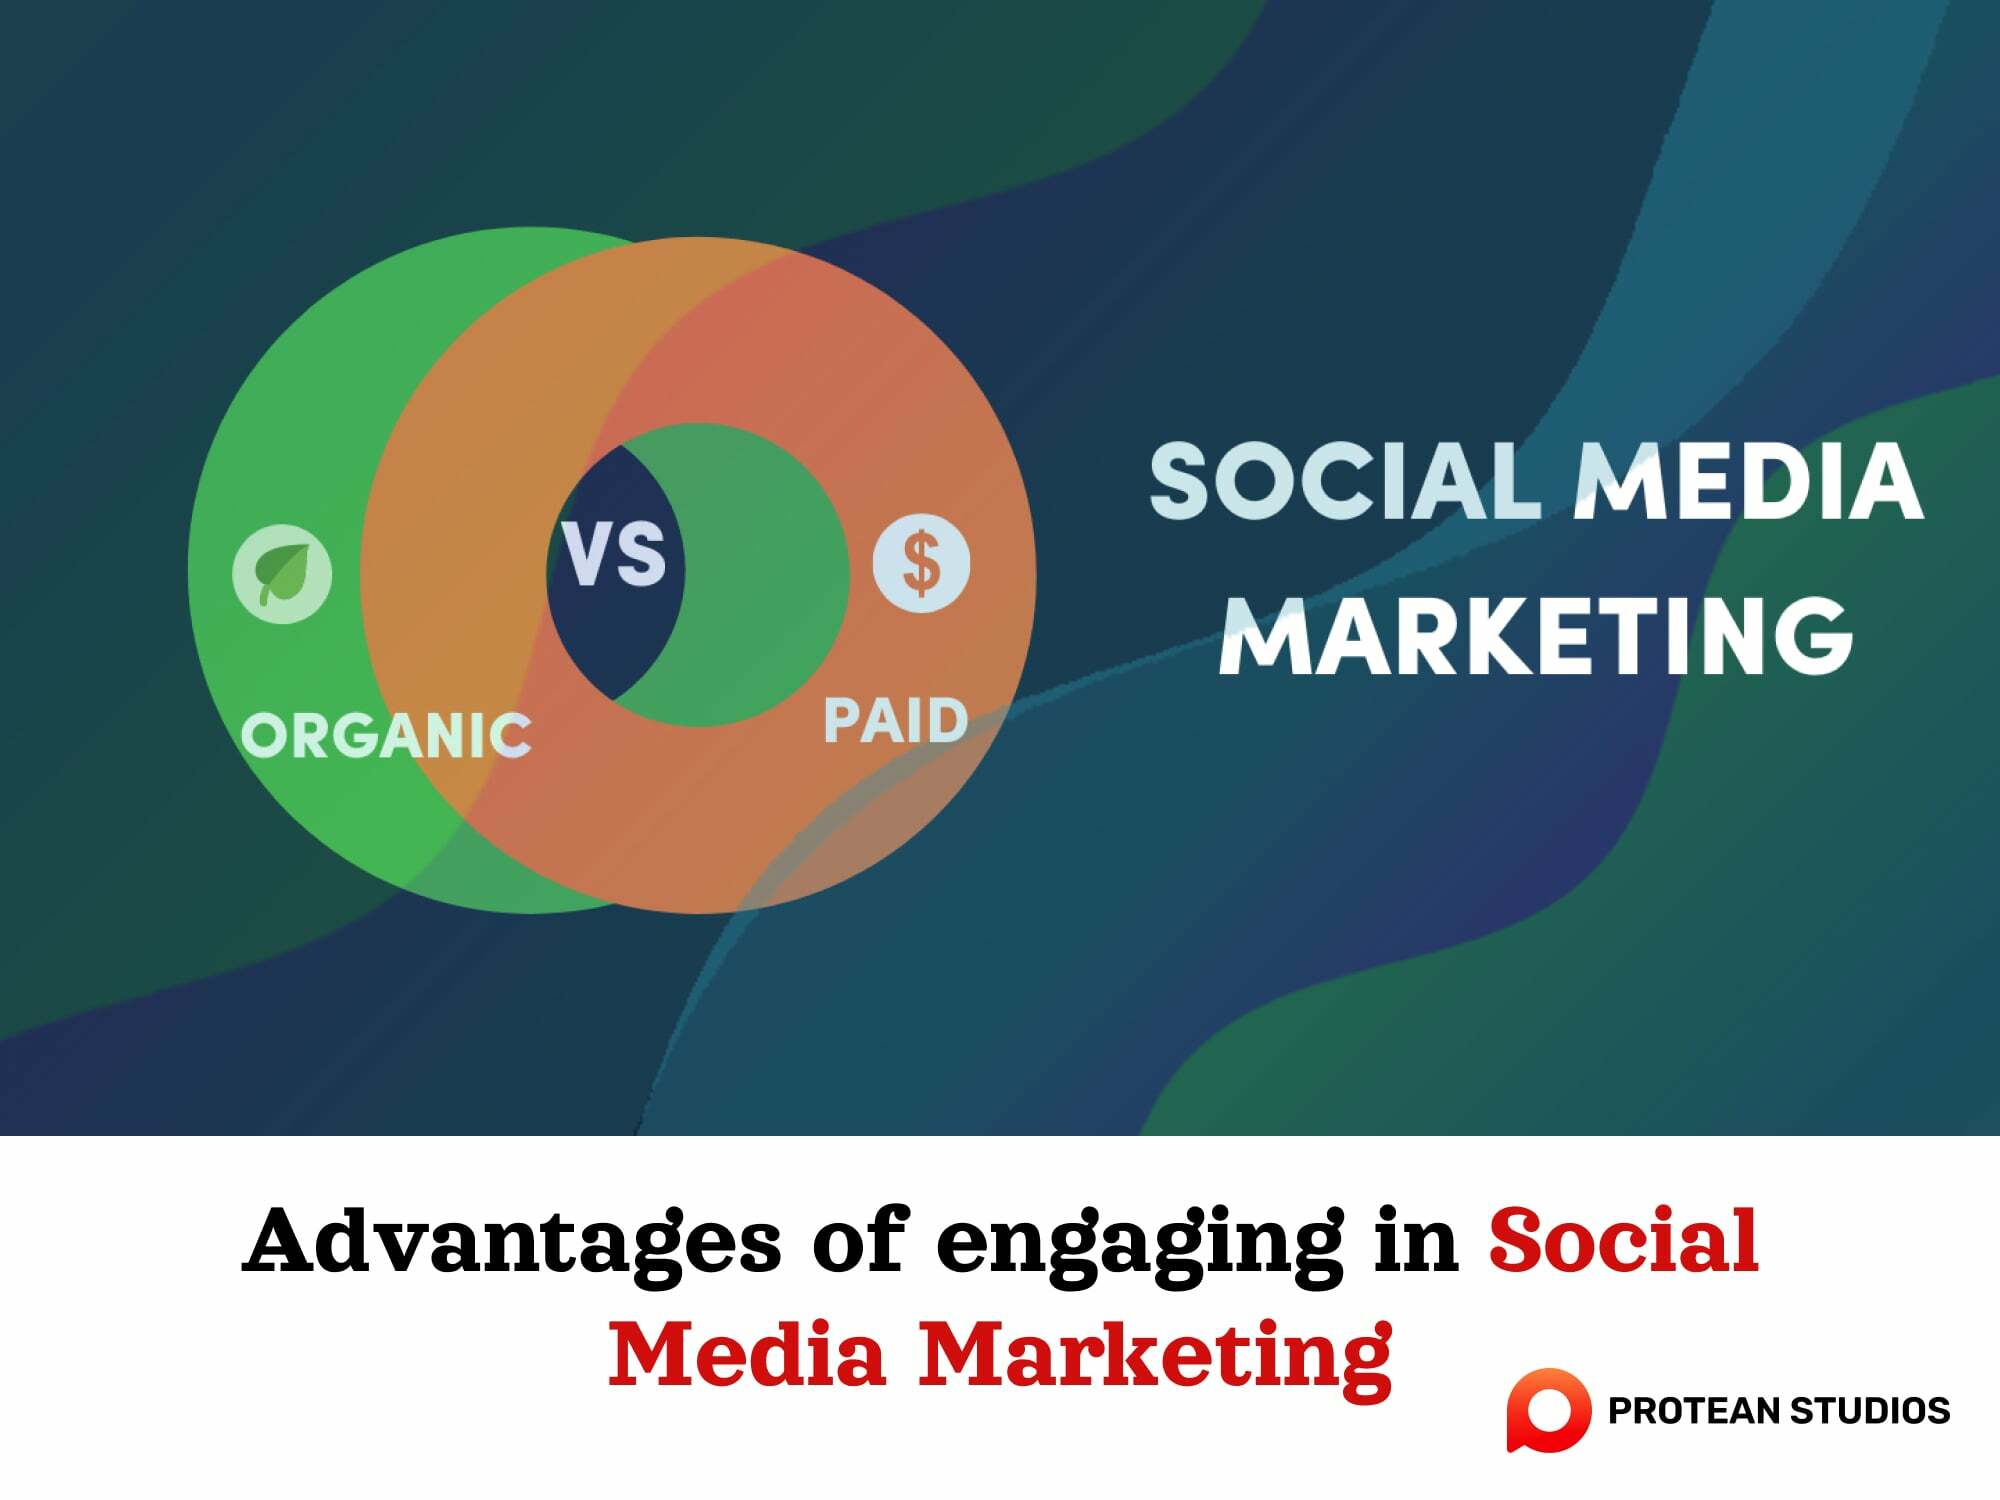 The social marketing helps enhance the brand’s awareness